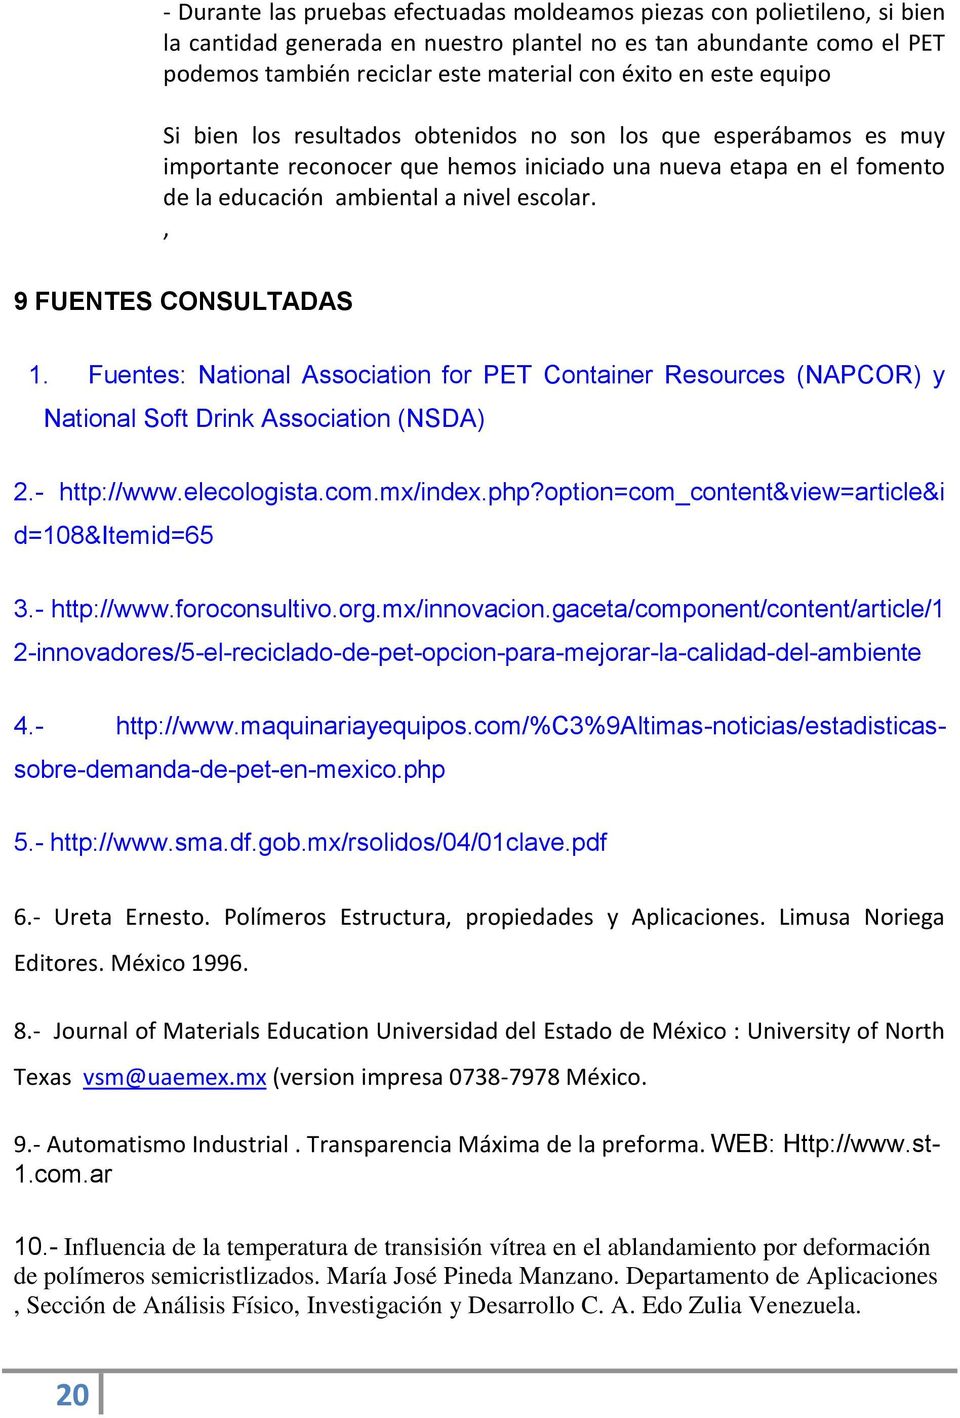 , 9 FUENTES CONSULTADAS 1. Fuentes: National Association for PET Container Resources (NAPCOR) y National Soft Drink Association (NSDA) 2.- http://www.elecologista.com.mx/index.php?